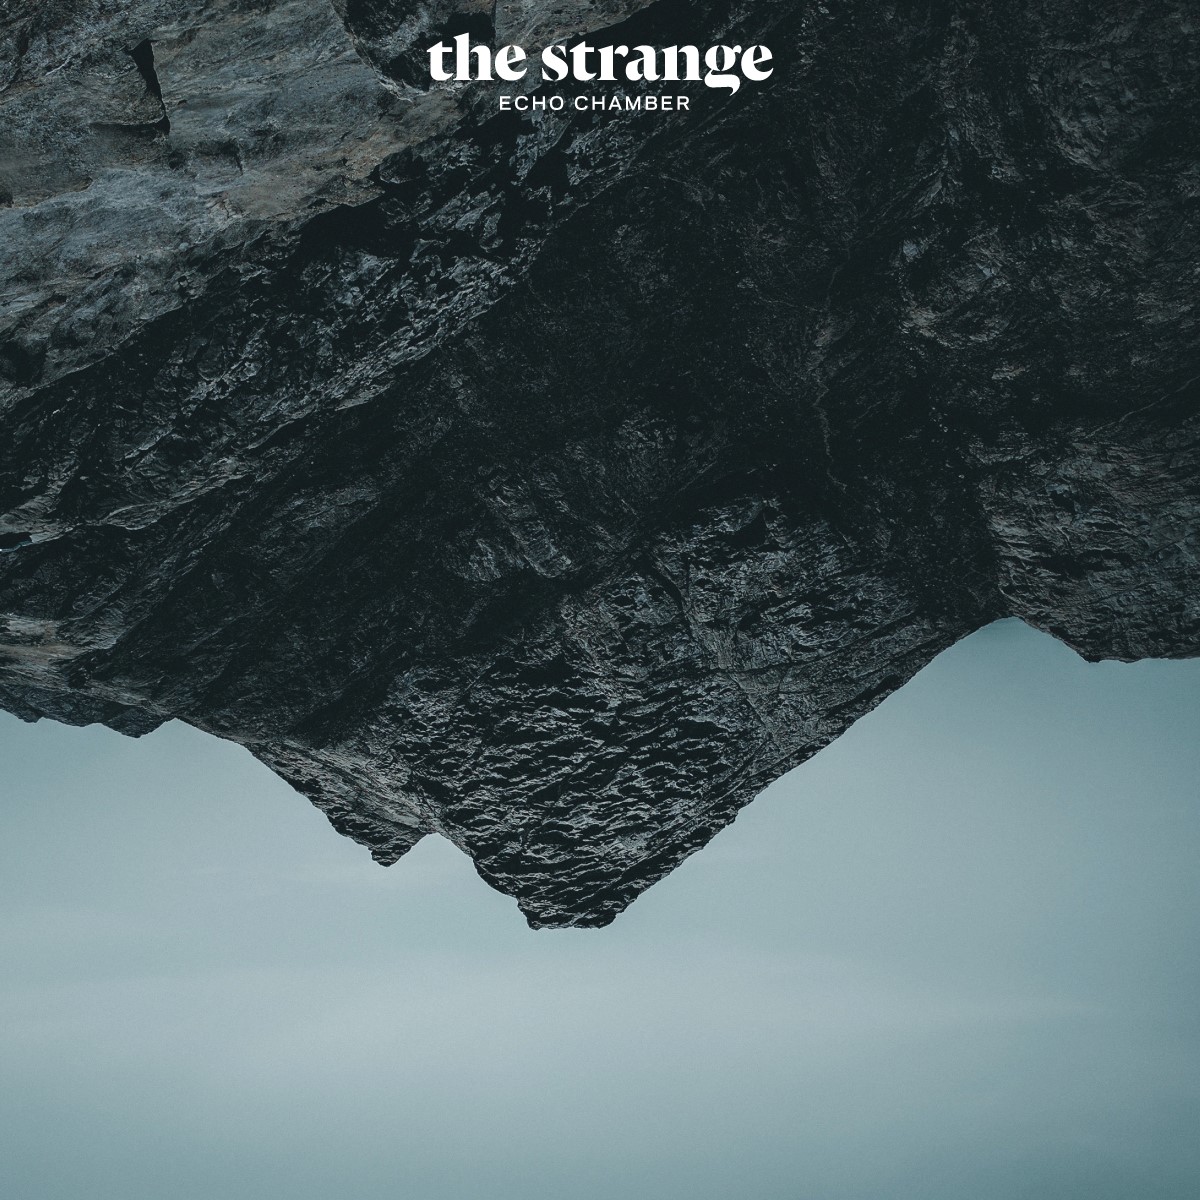 Pročitajte više o članku The Strange – new album 'Echo Chamber' out 12/10/2018